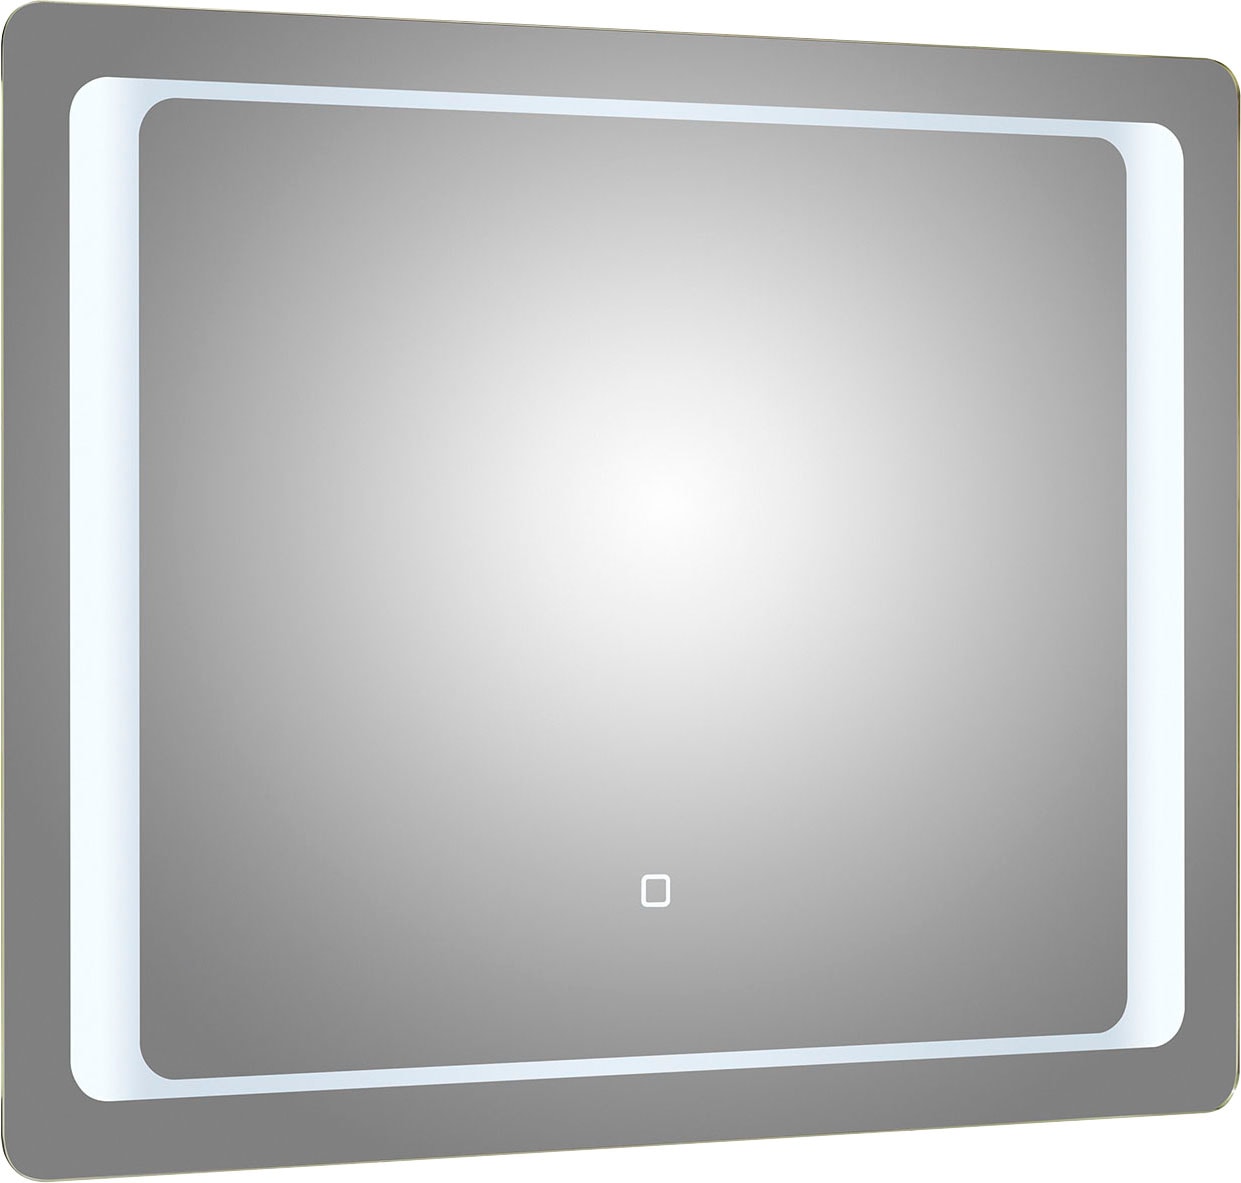 Saphir Badspiegel »Quickset Spiegel inkl. LED-Beleuchtung und Touchsensor, 90 cm breit«, Flächenspiegel rechteckig, 12V LED, 20 Watt, Wandspiegel